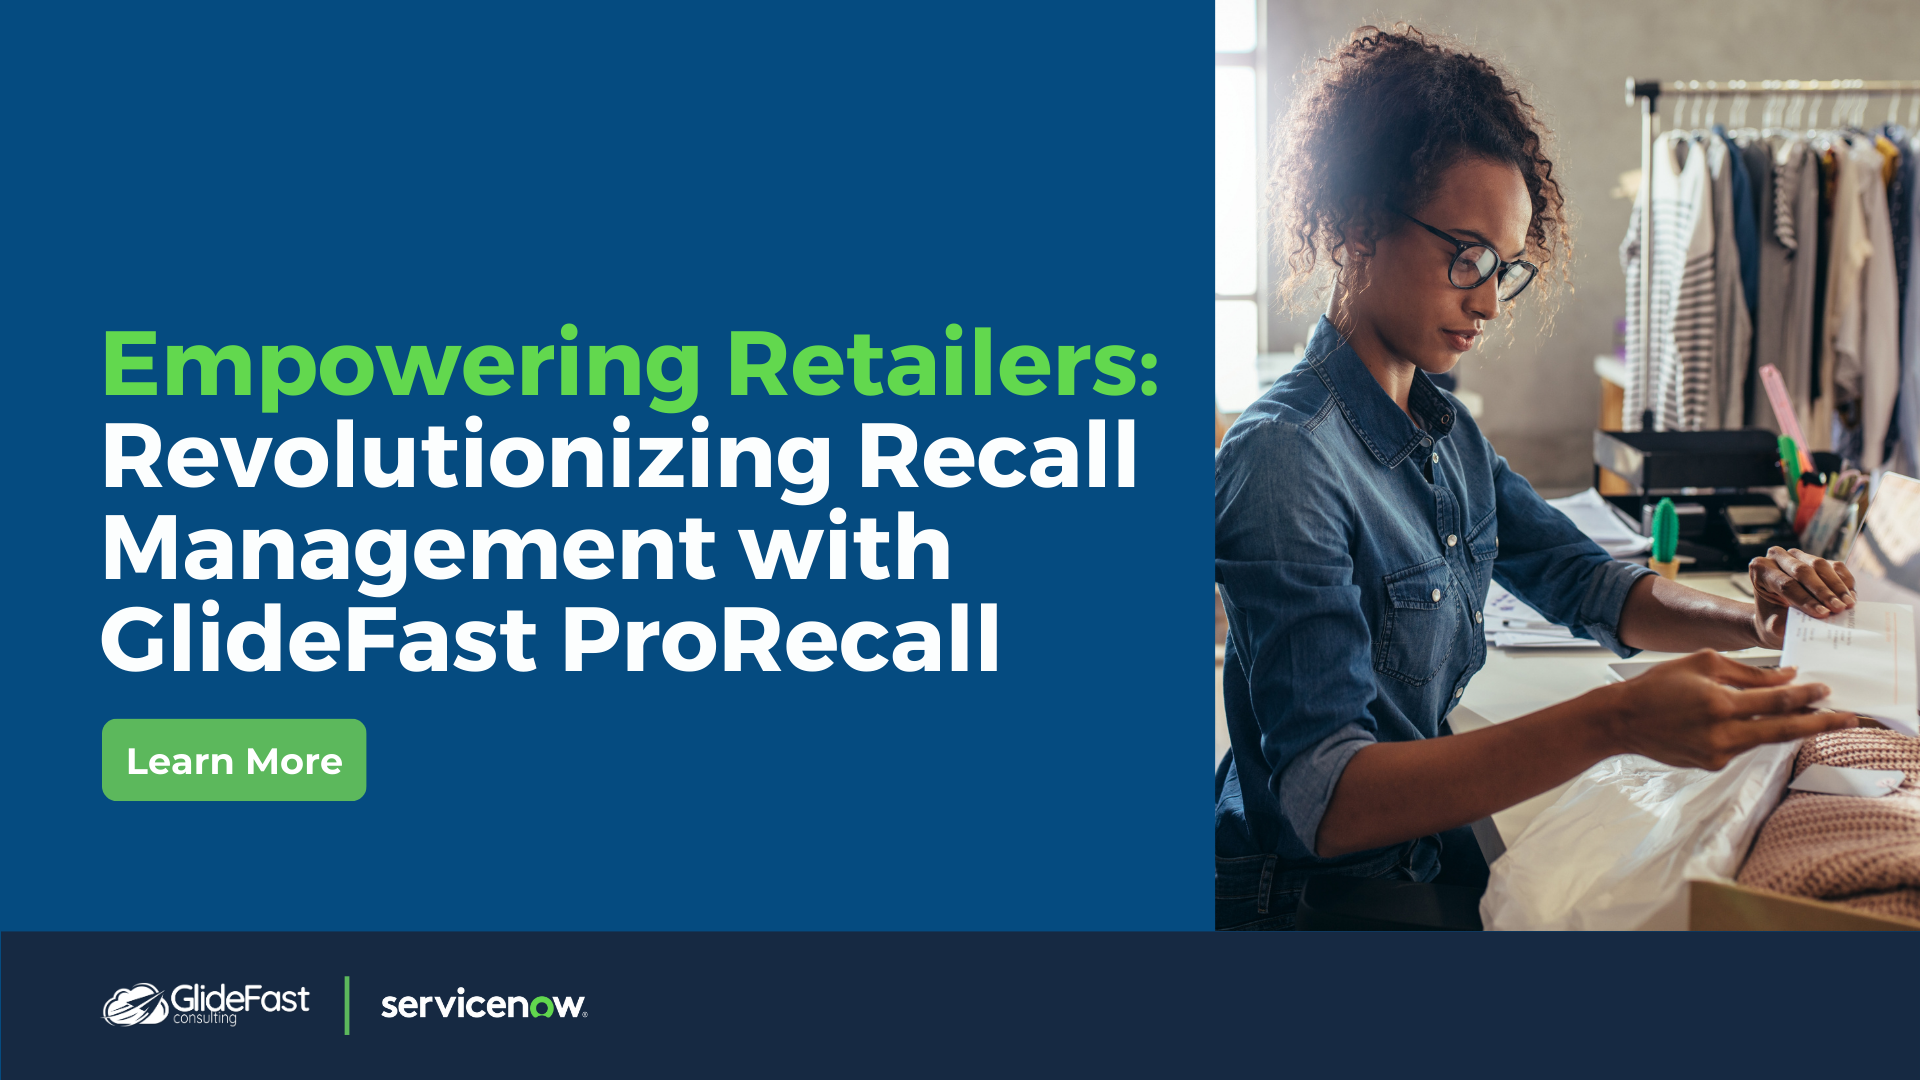 Empowering Retailers: Revolutionizing Recall Management with GlideFast ProRecall